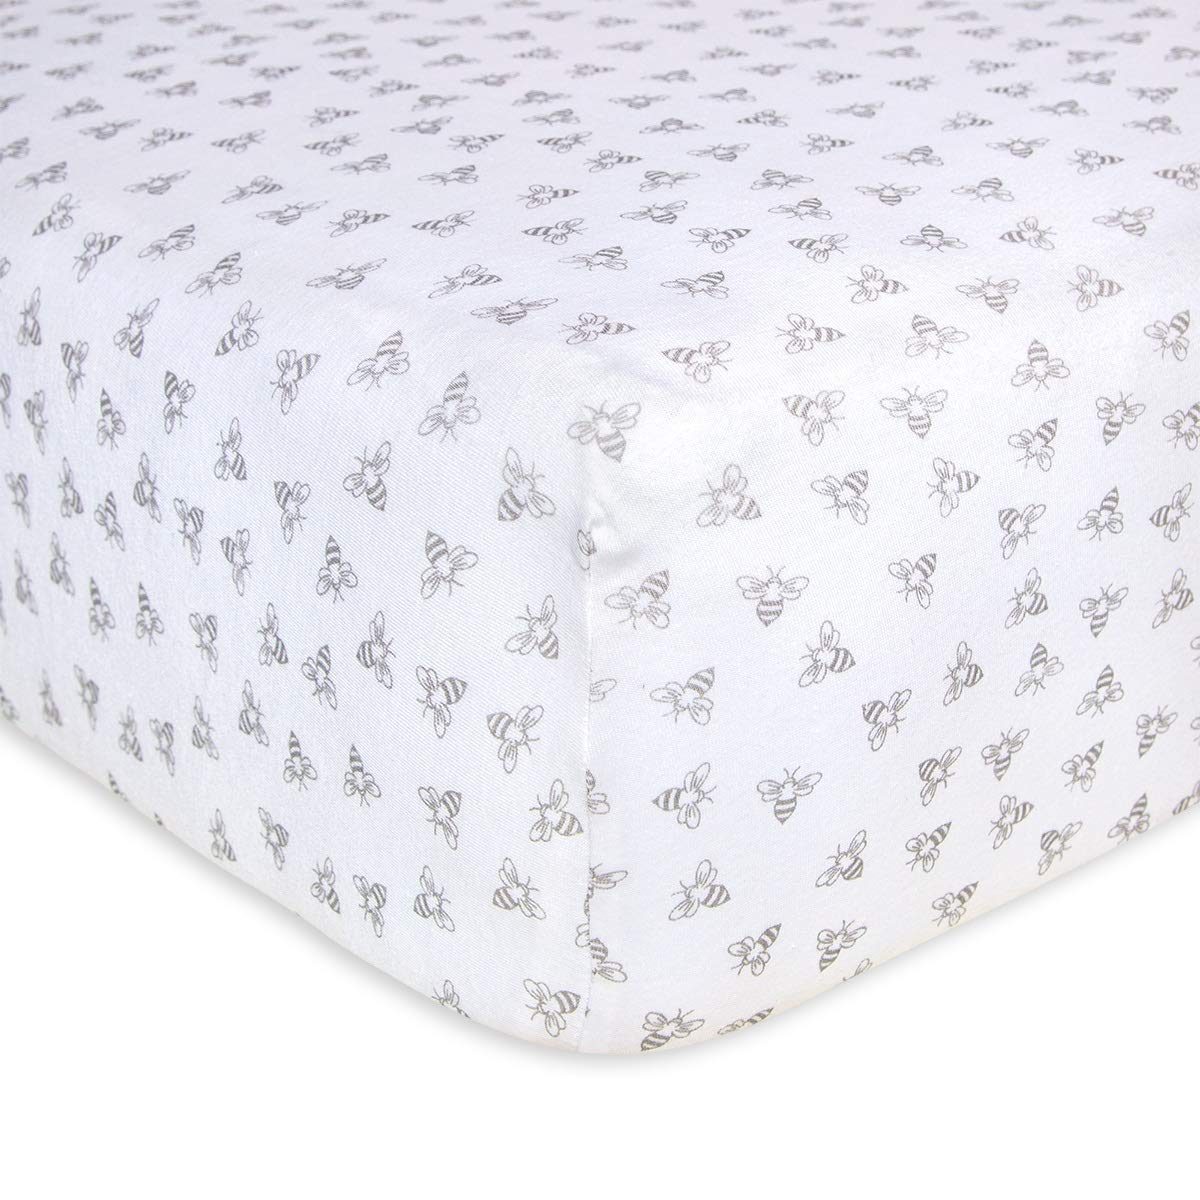 100% Organic Cotton Crib Sheet - Heather Grey Honeybee Print